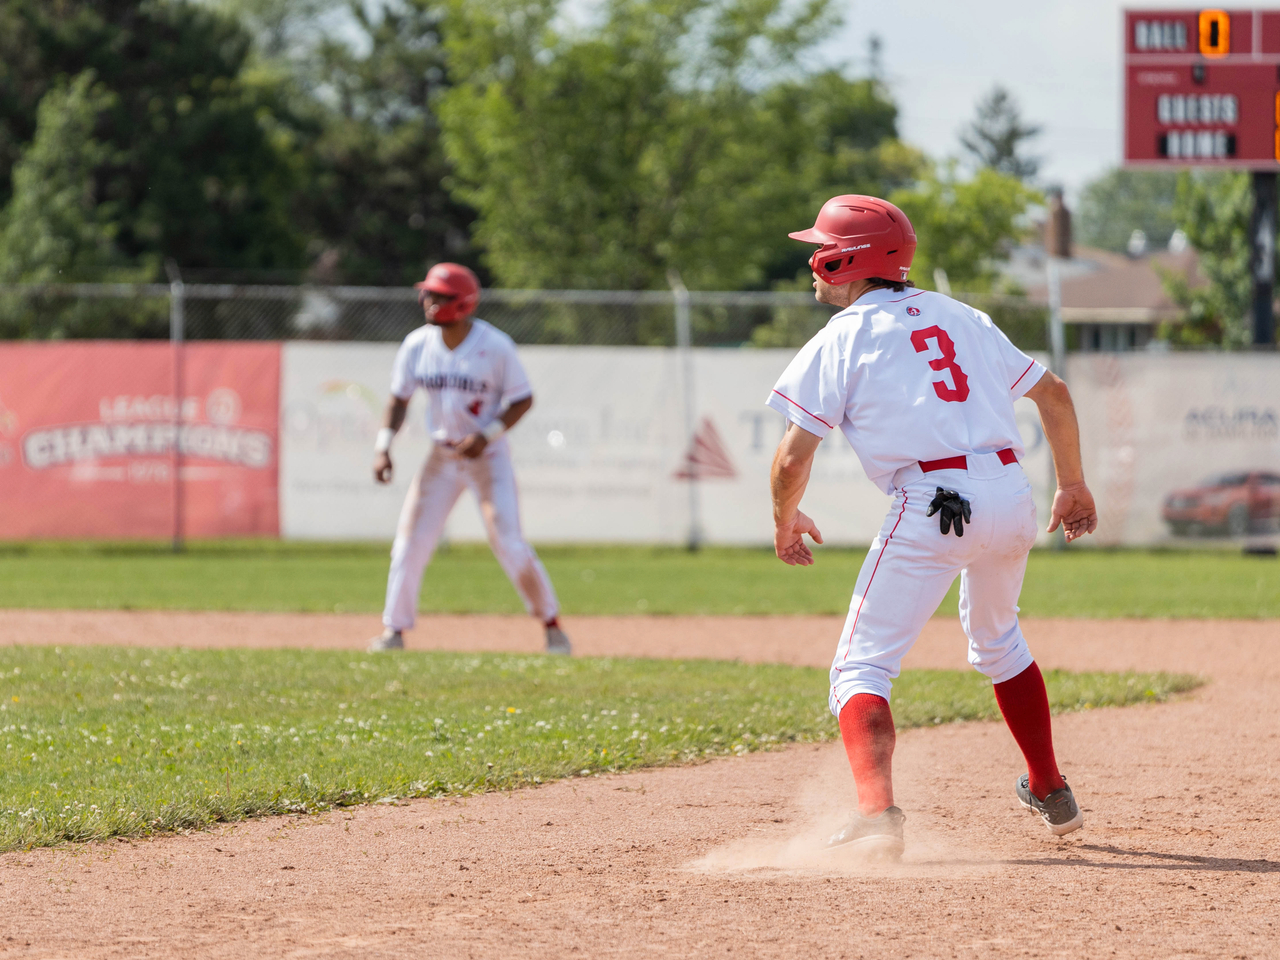 Cardinals players running bases.